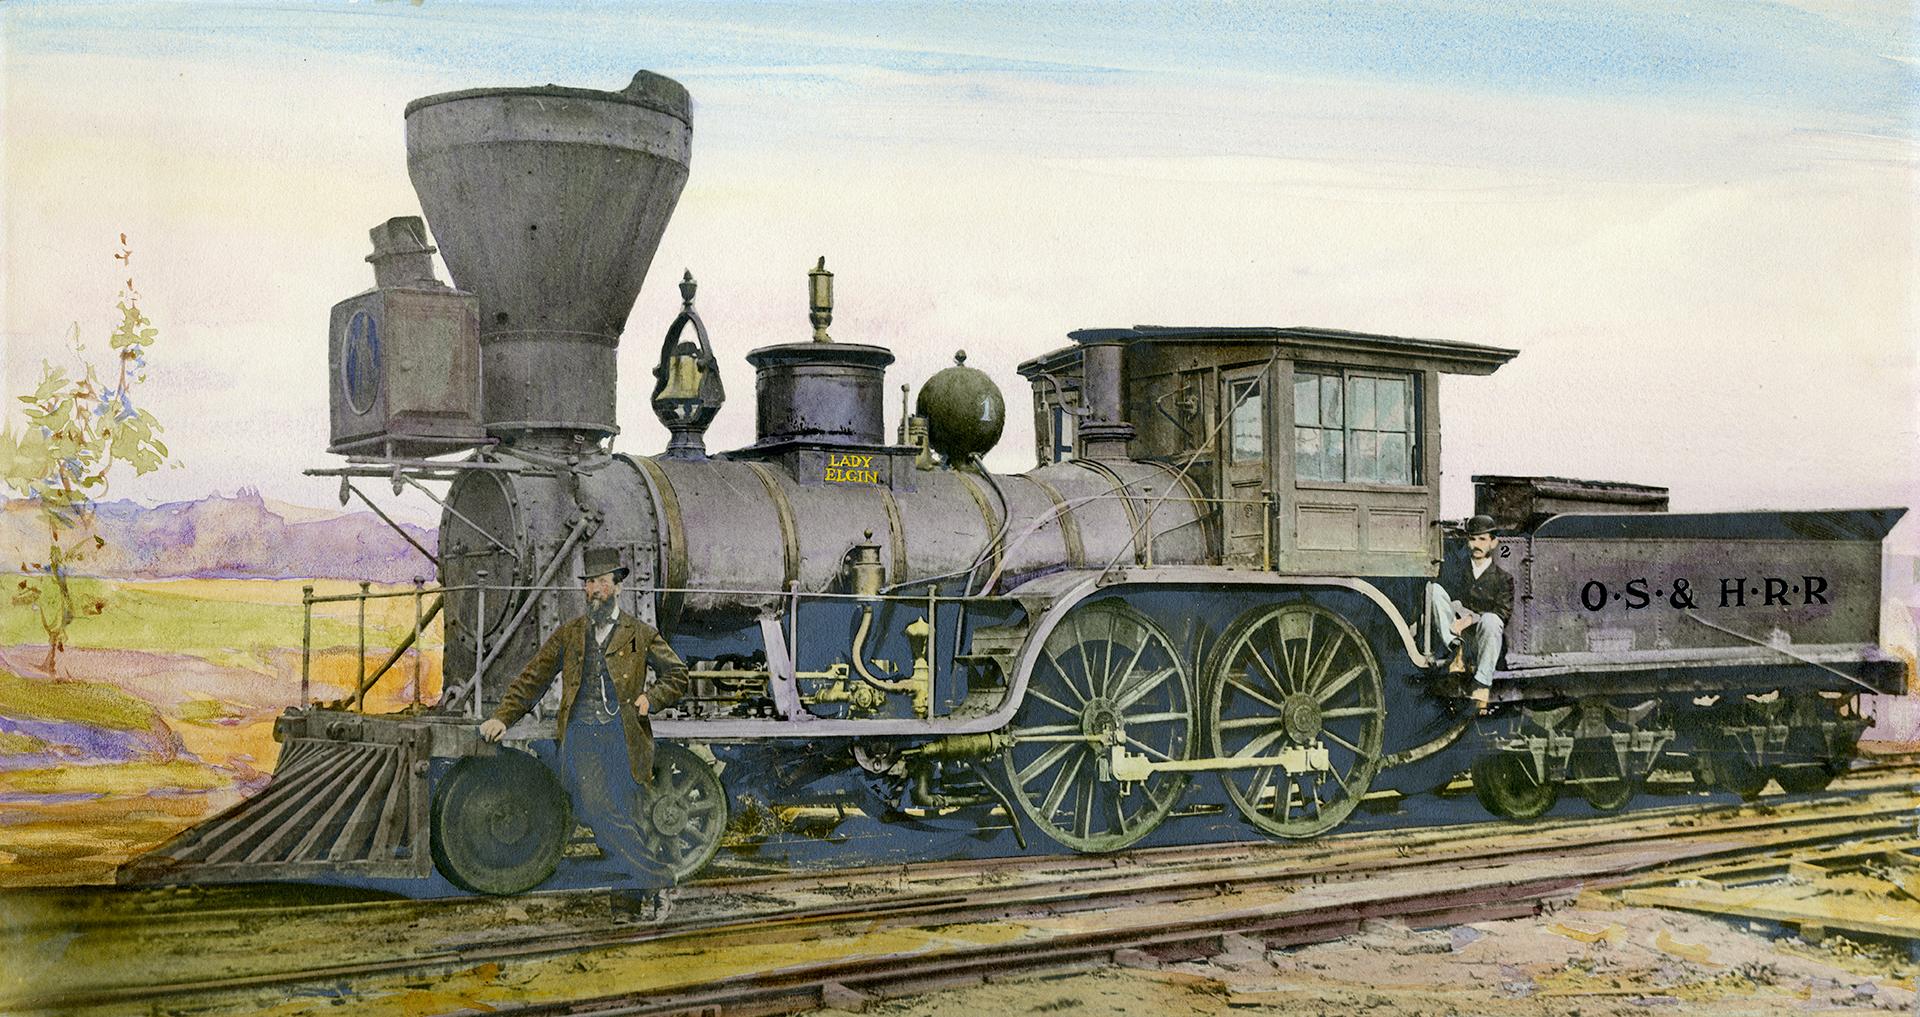 Image shows a steam locomotive on tracks.